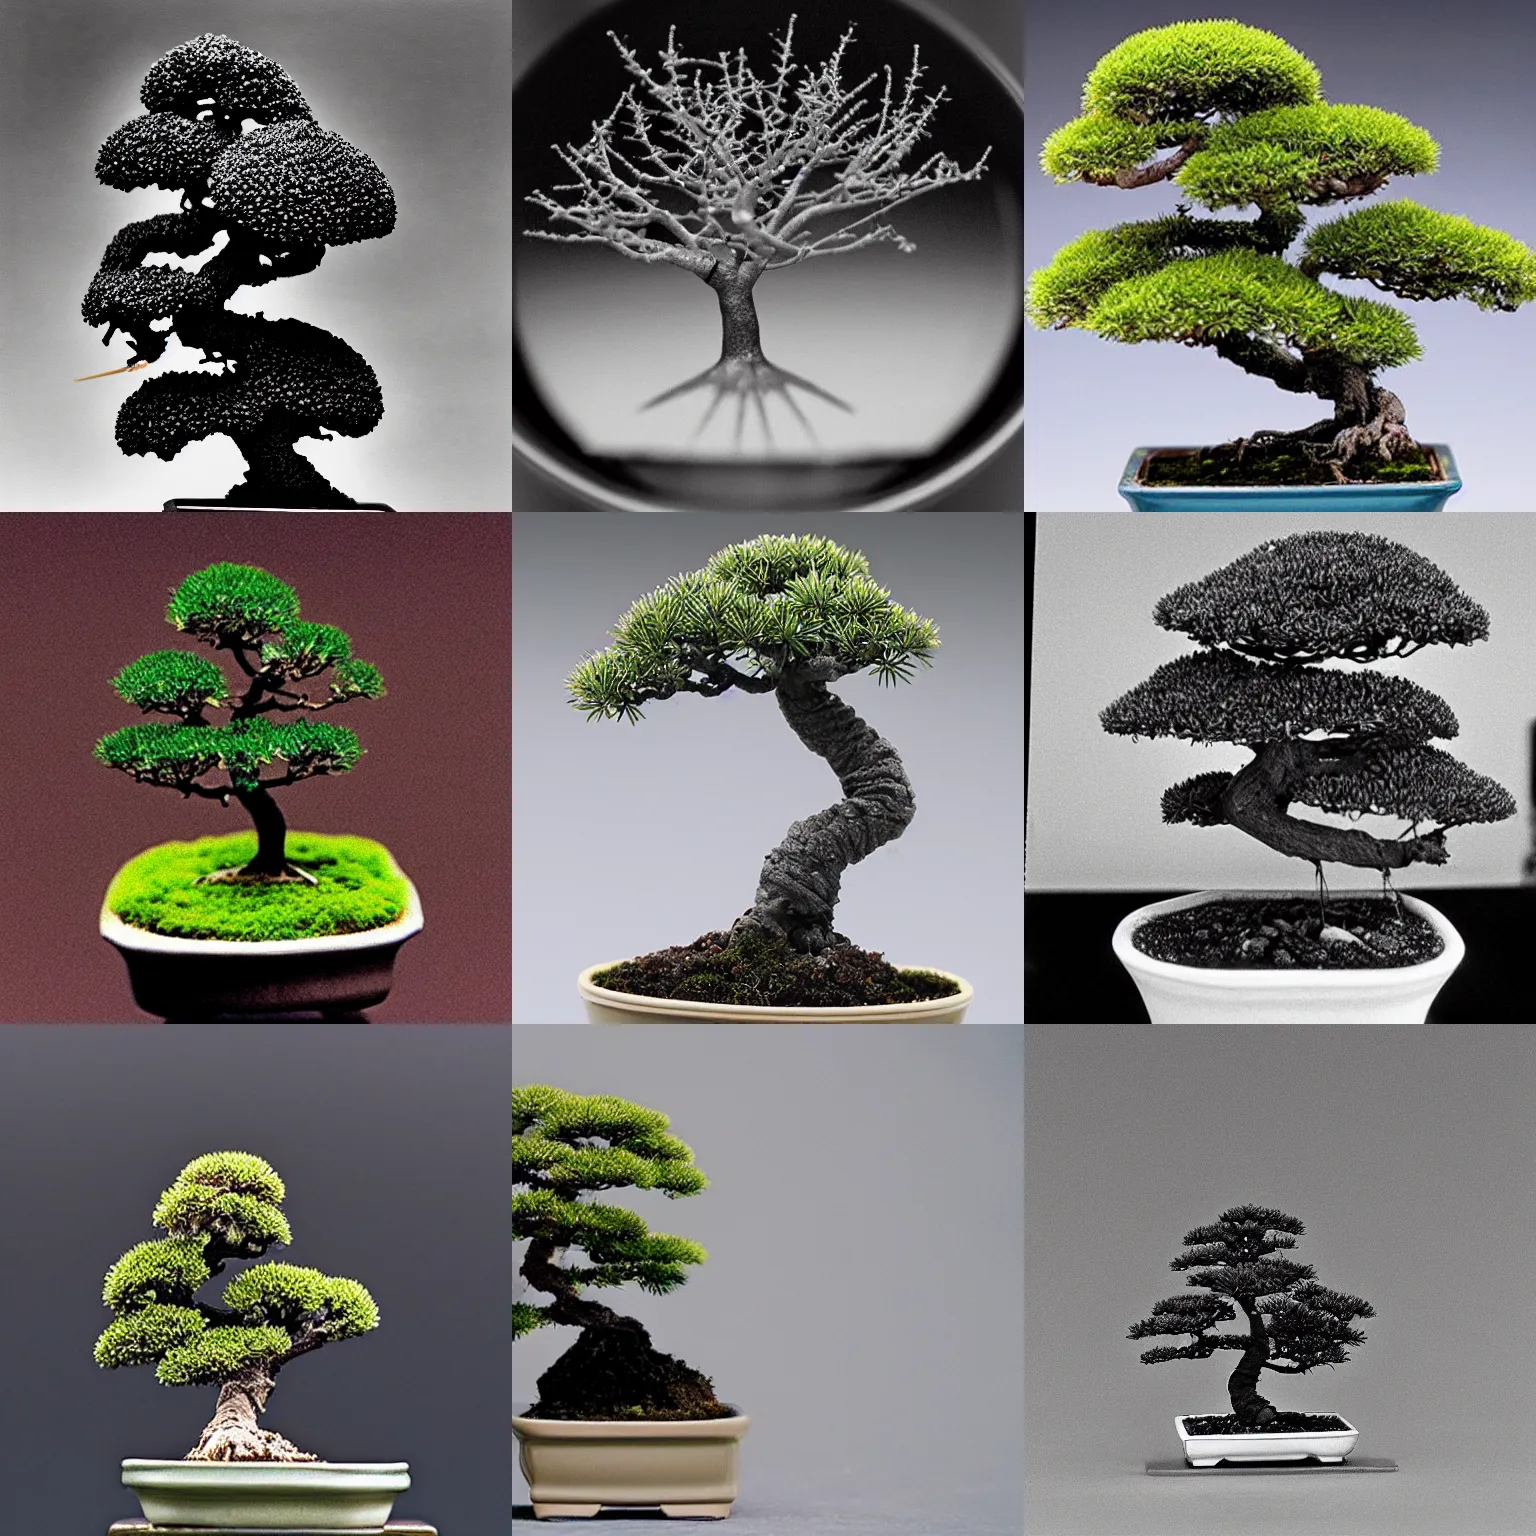 Prompt: a microscopic bonsai tree, phase-contrast microscopy, original research